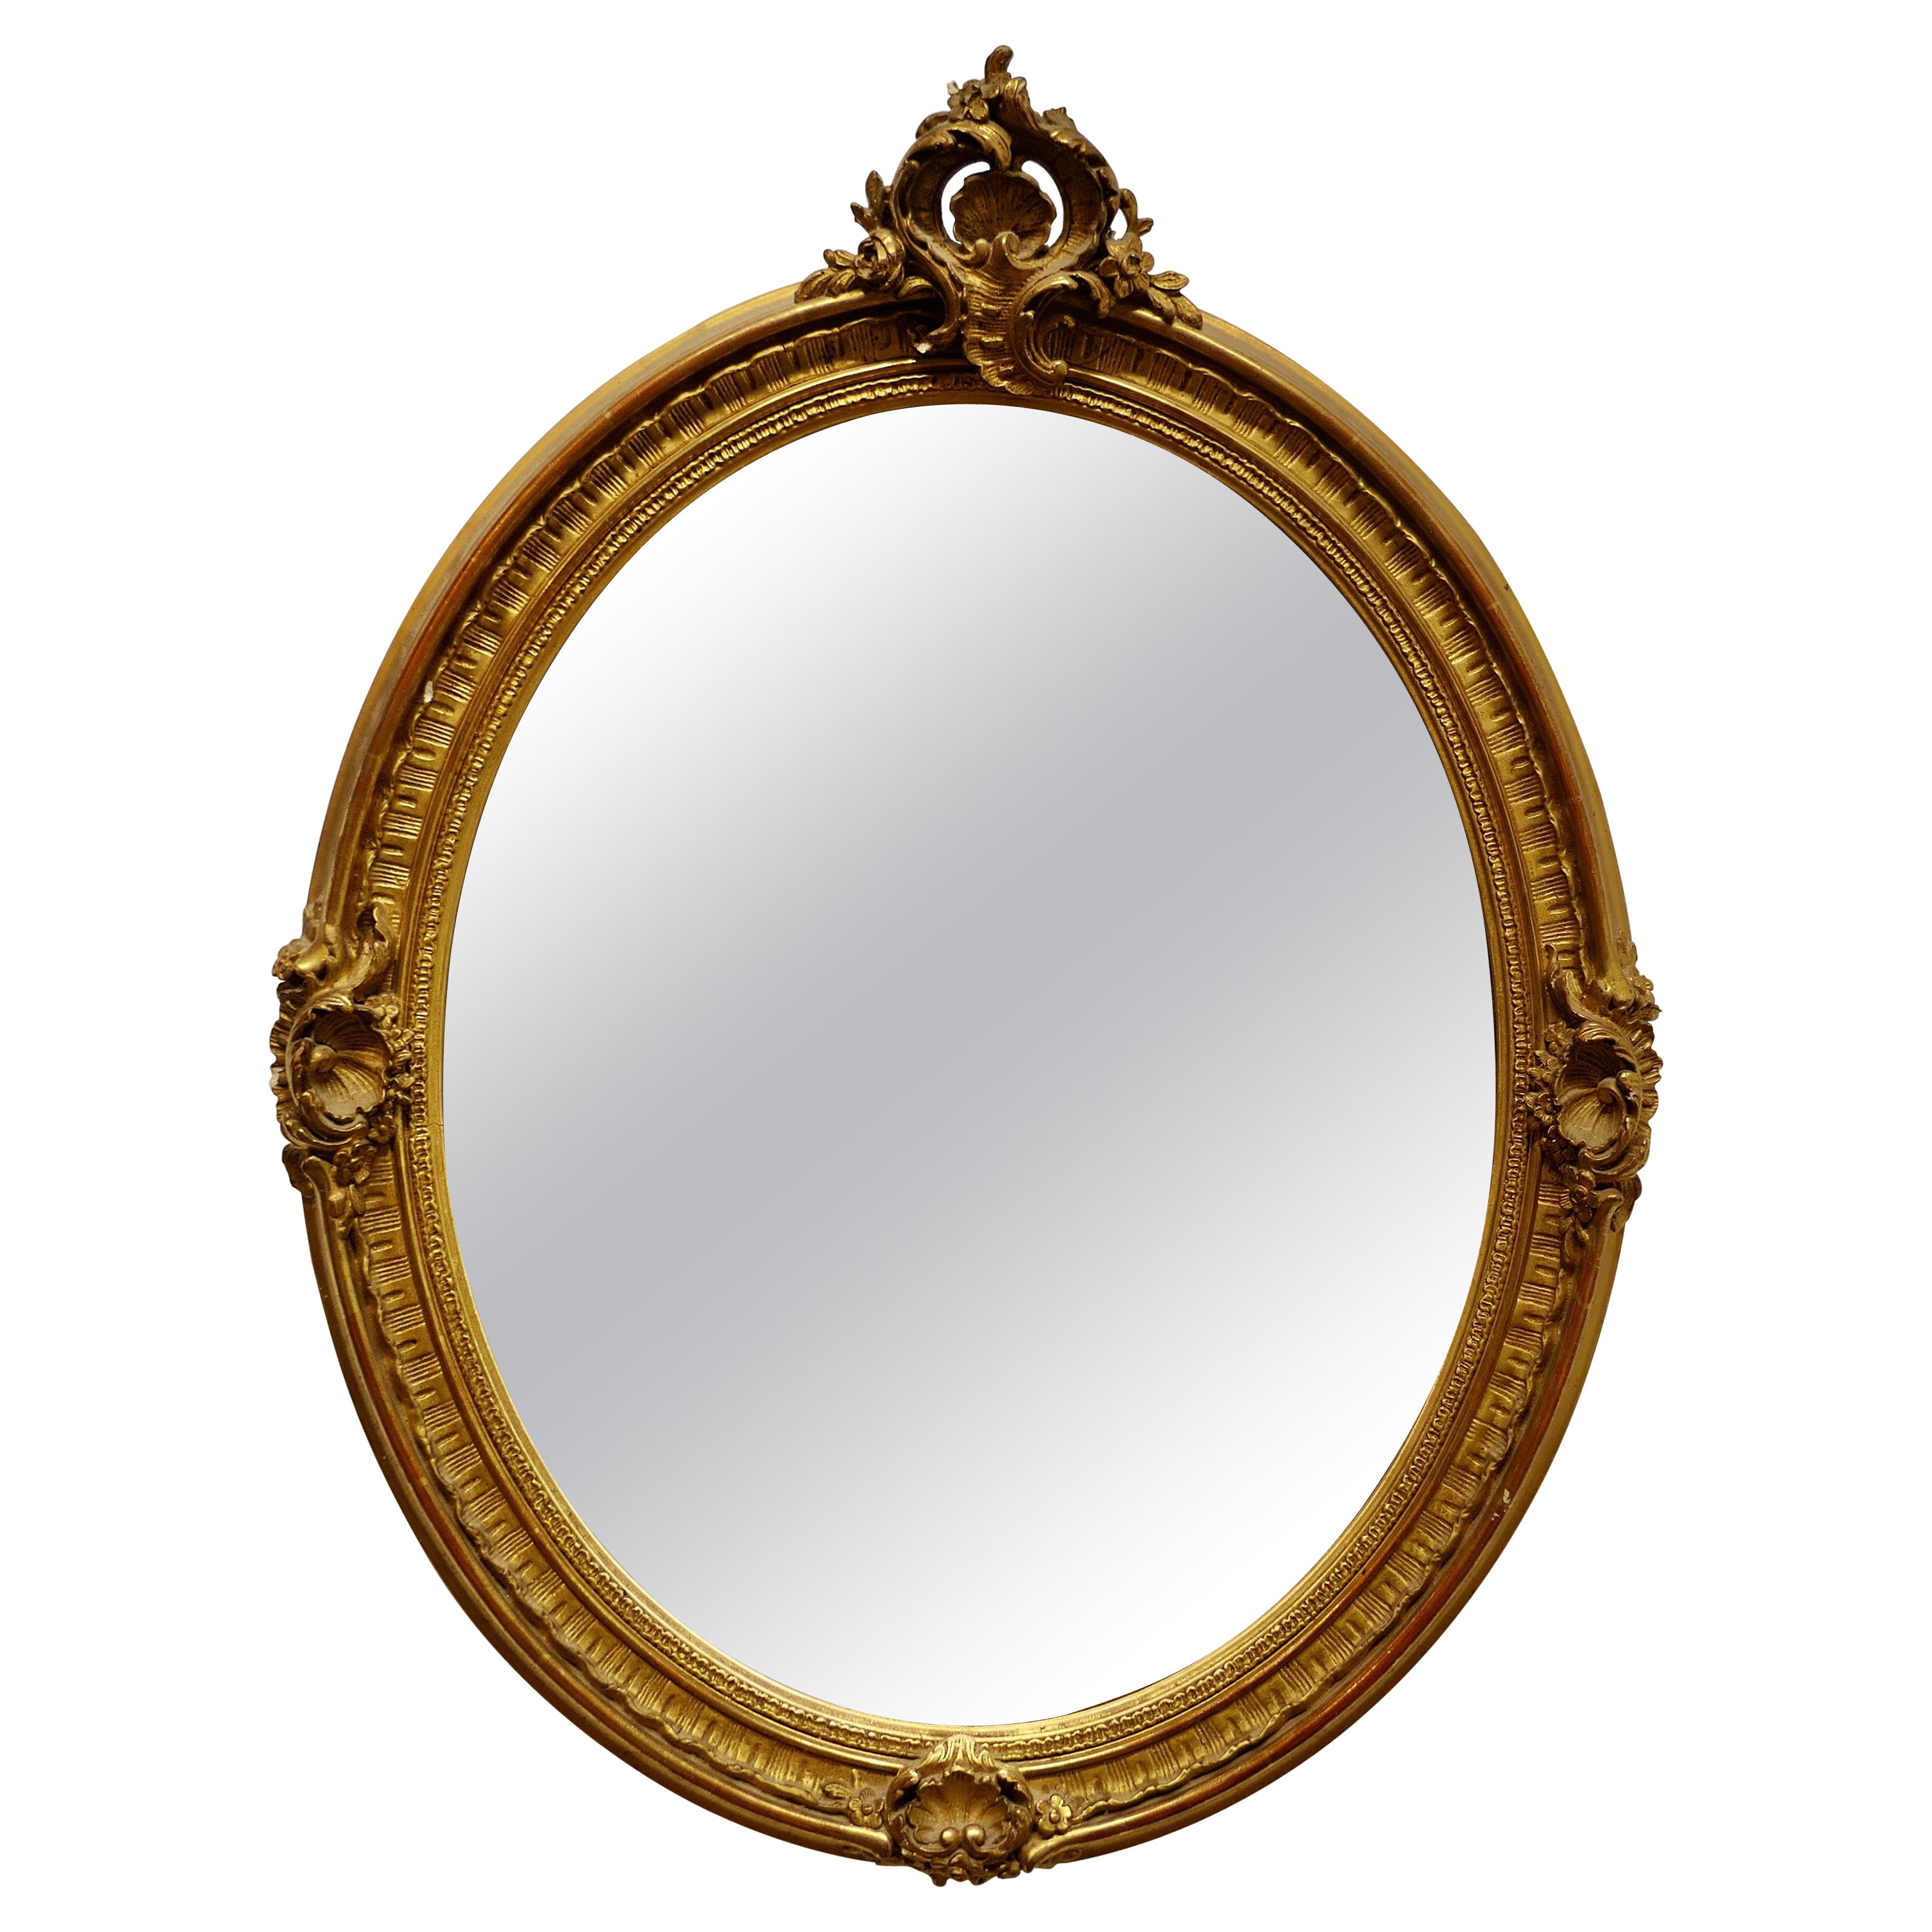 Very Pretty French Rococo Oval Gilt Wall Mirror   